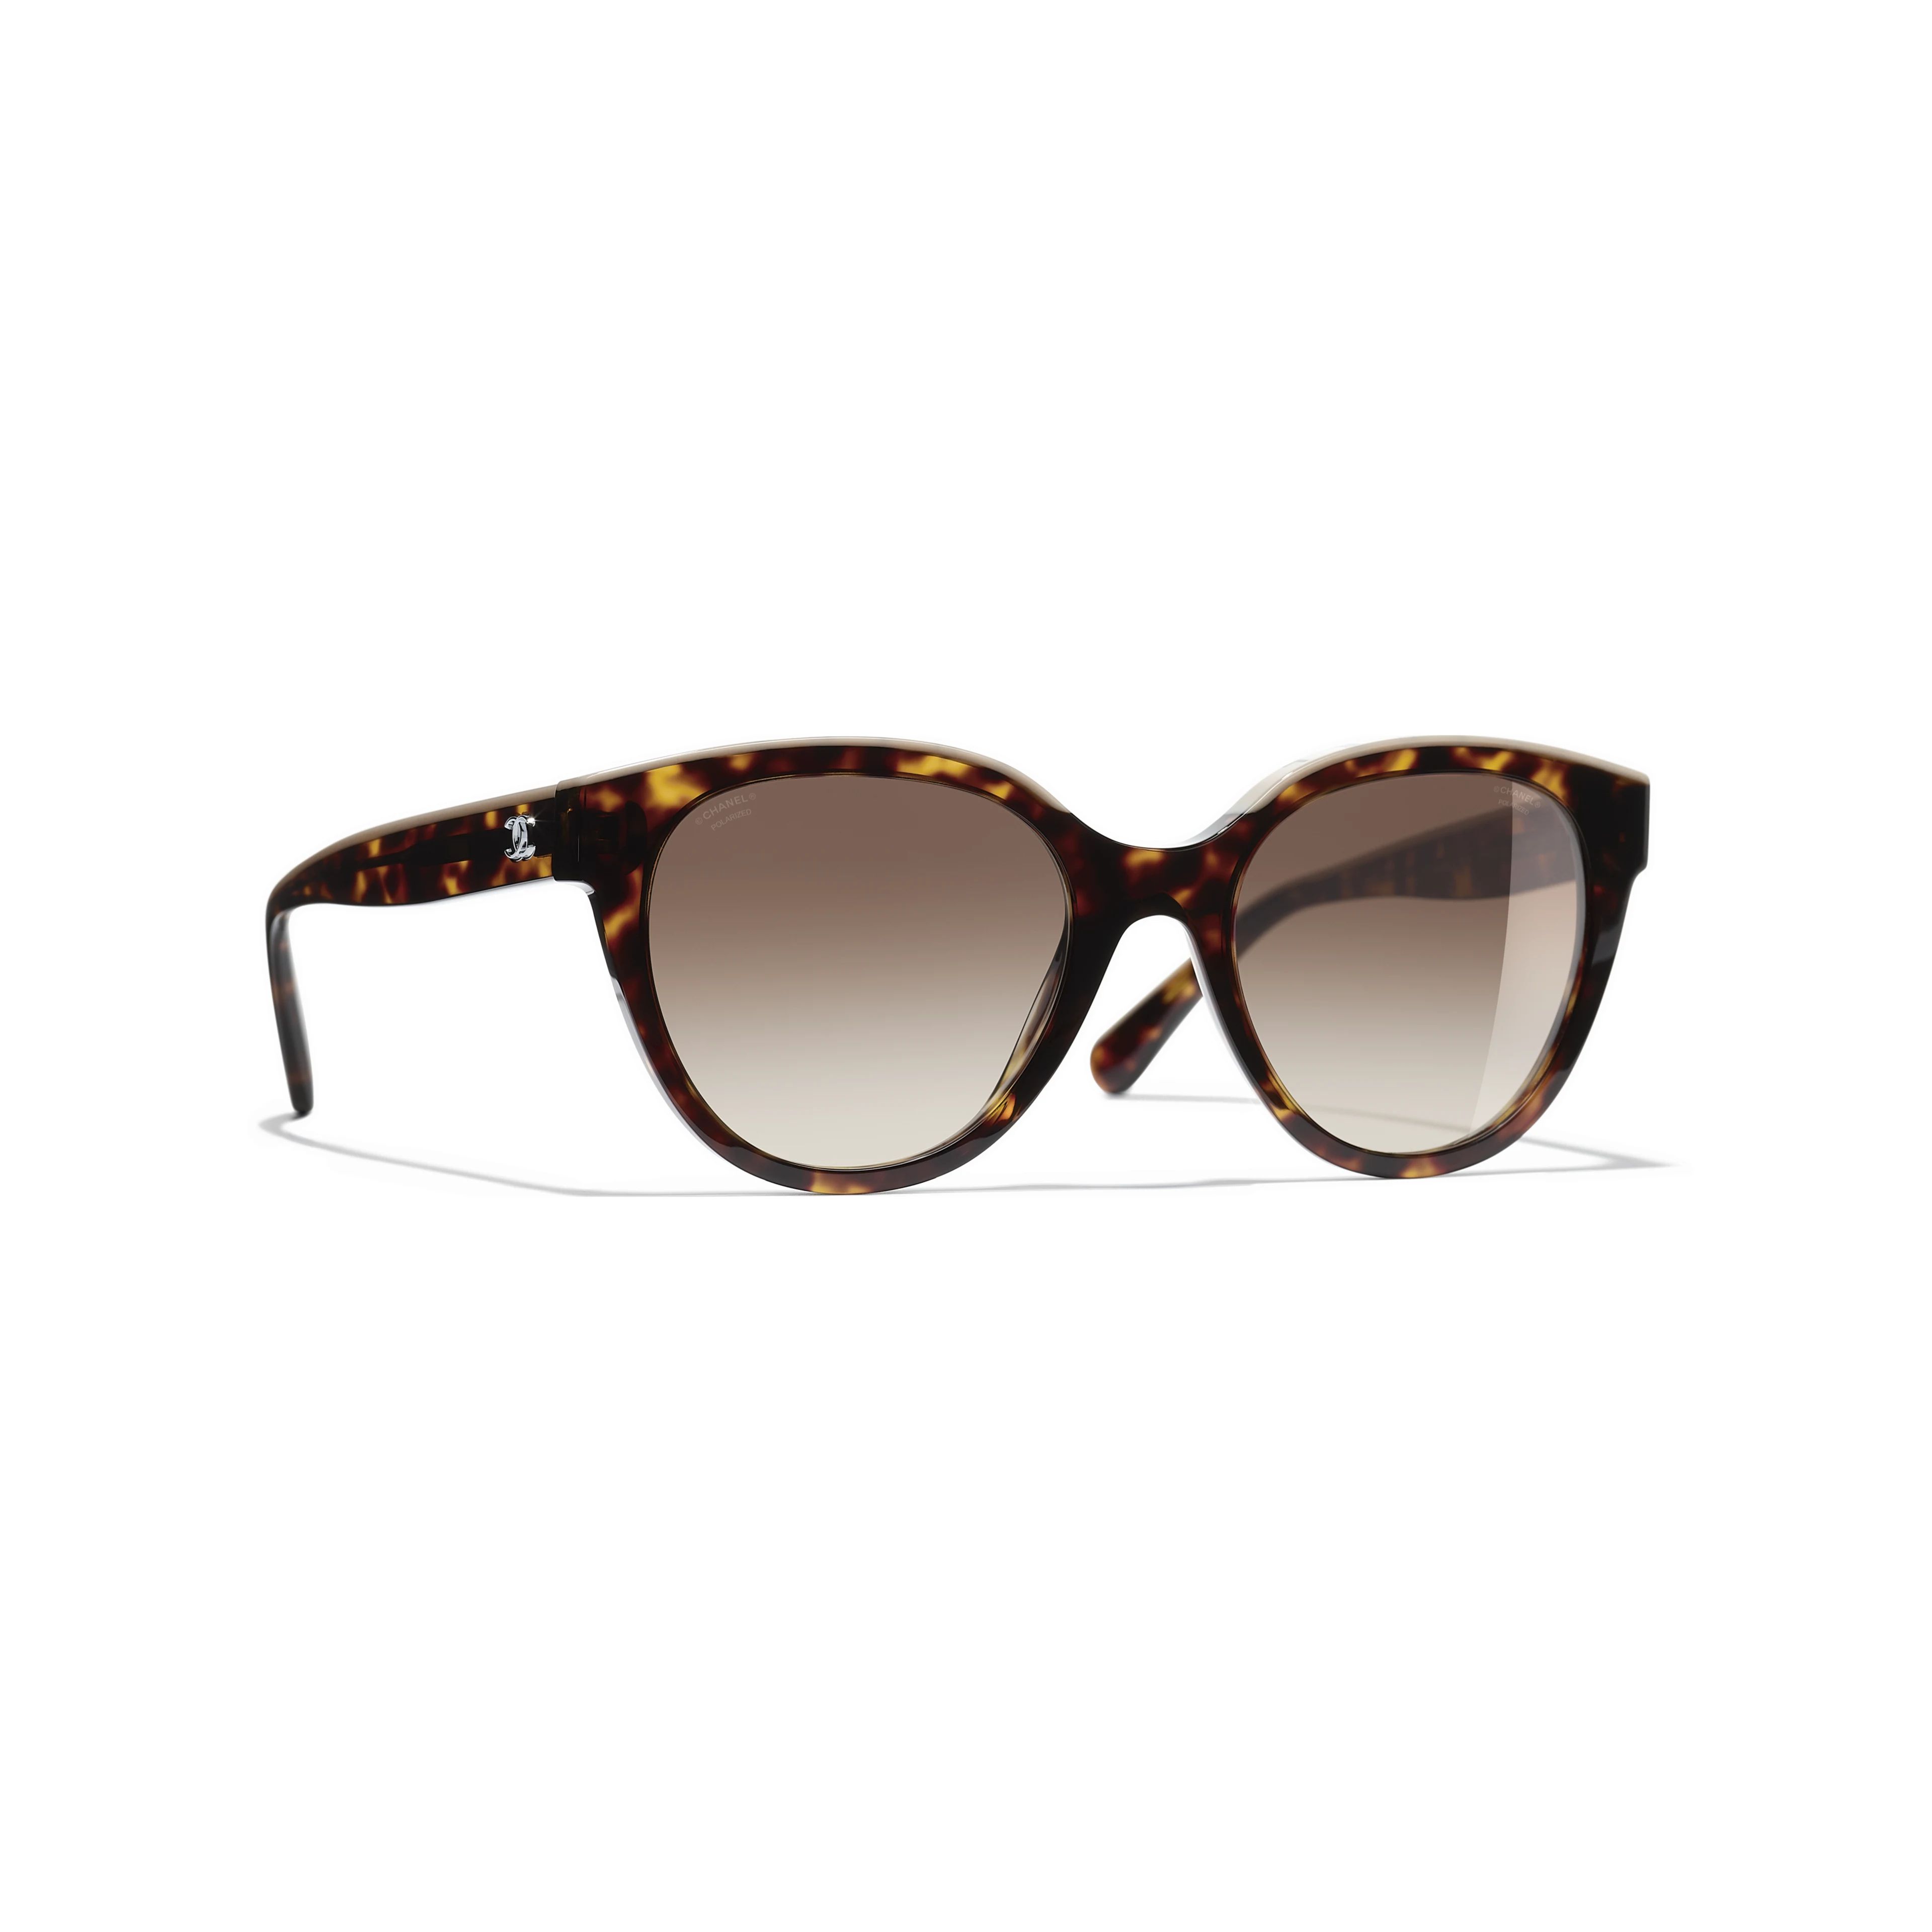 Sunglasses: Butterfly Sunglasses, acetate — Fashion | CHANEL | Chanel, Inc. (US)